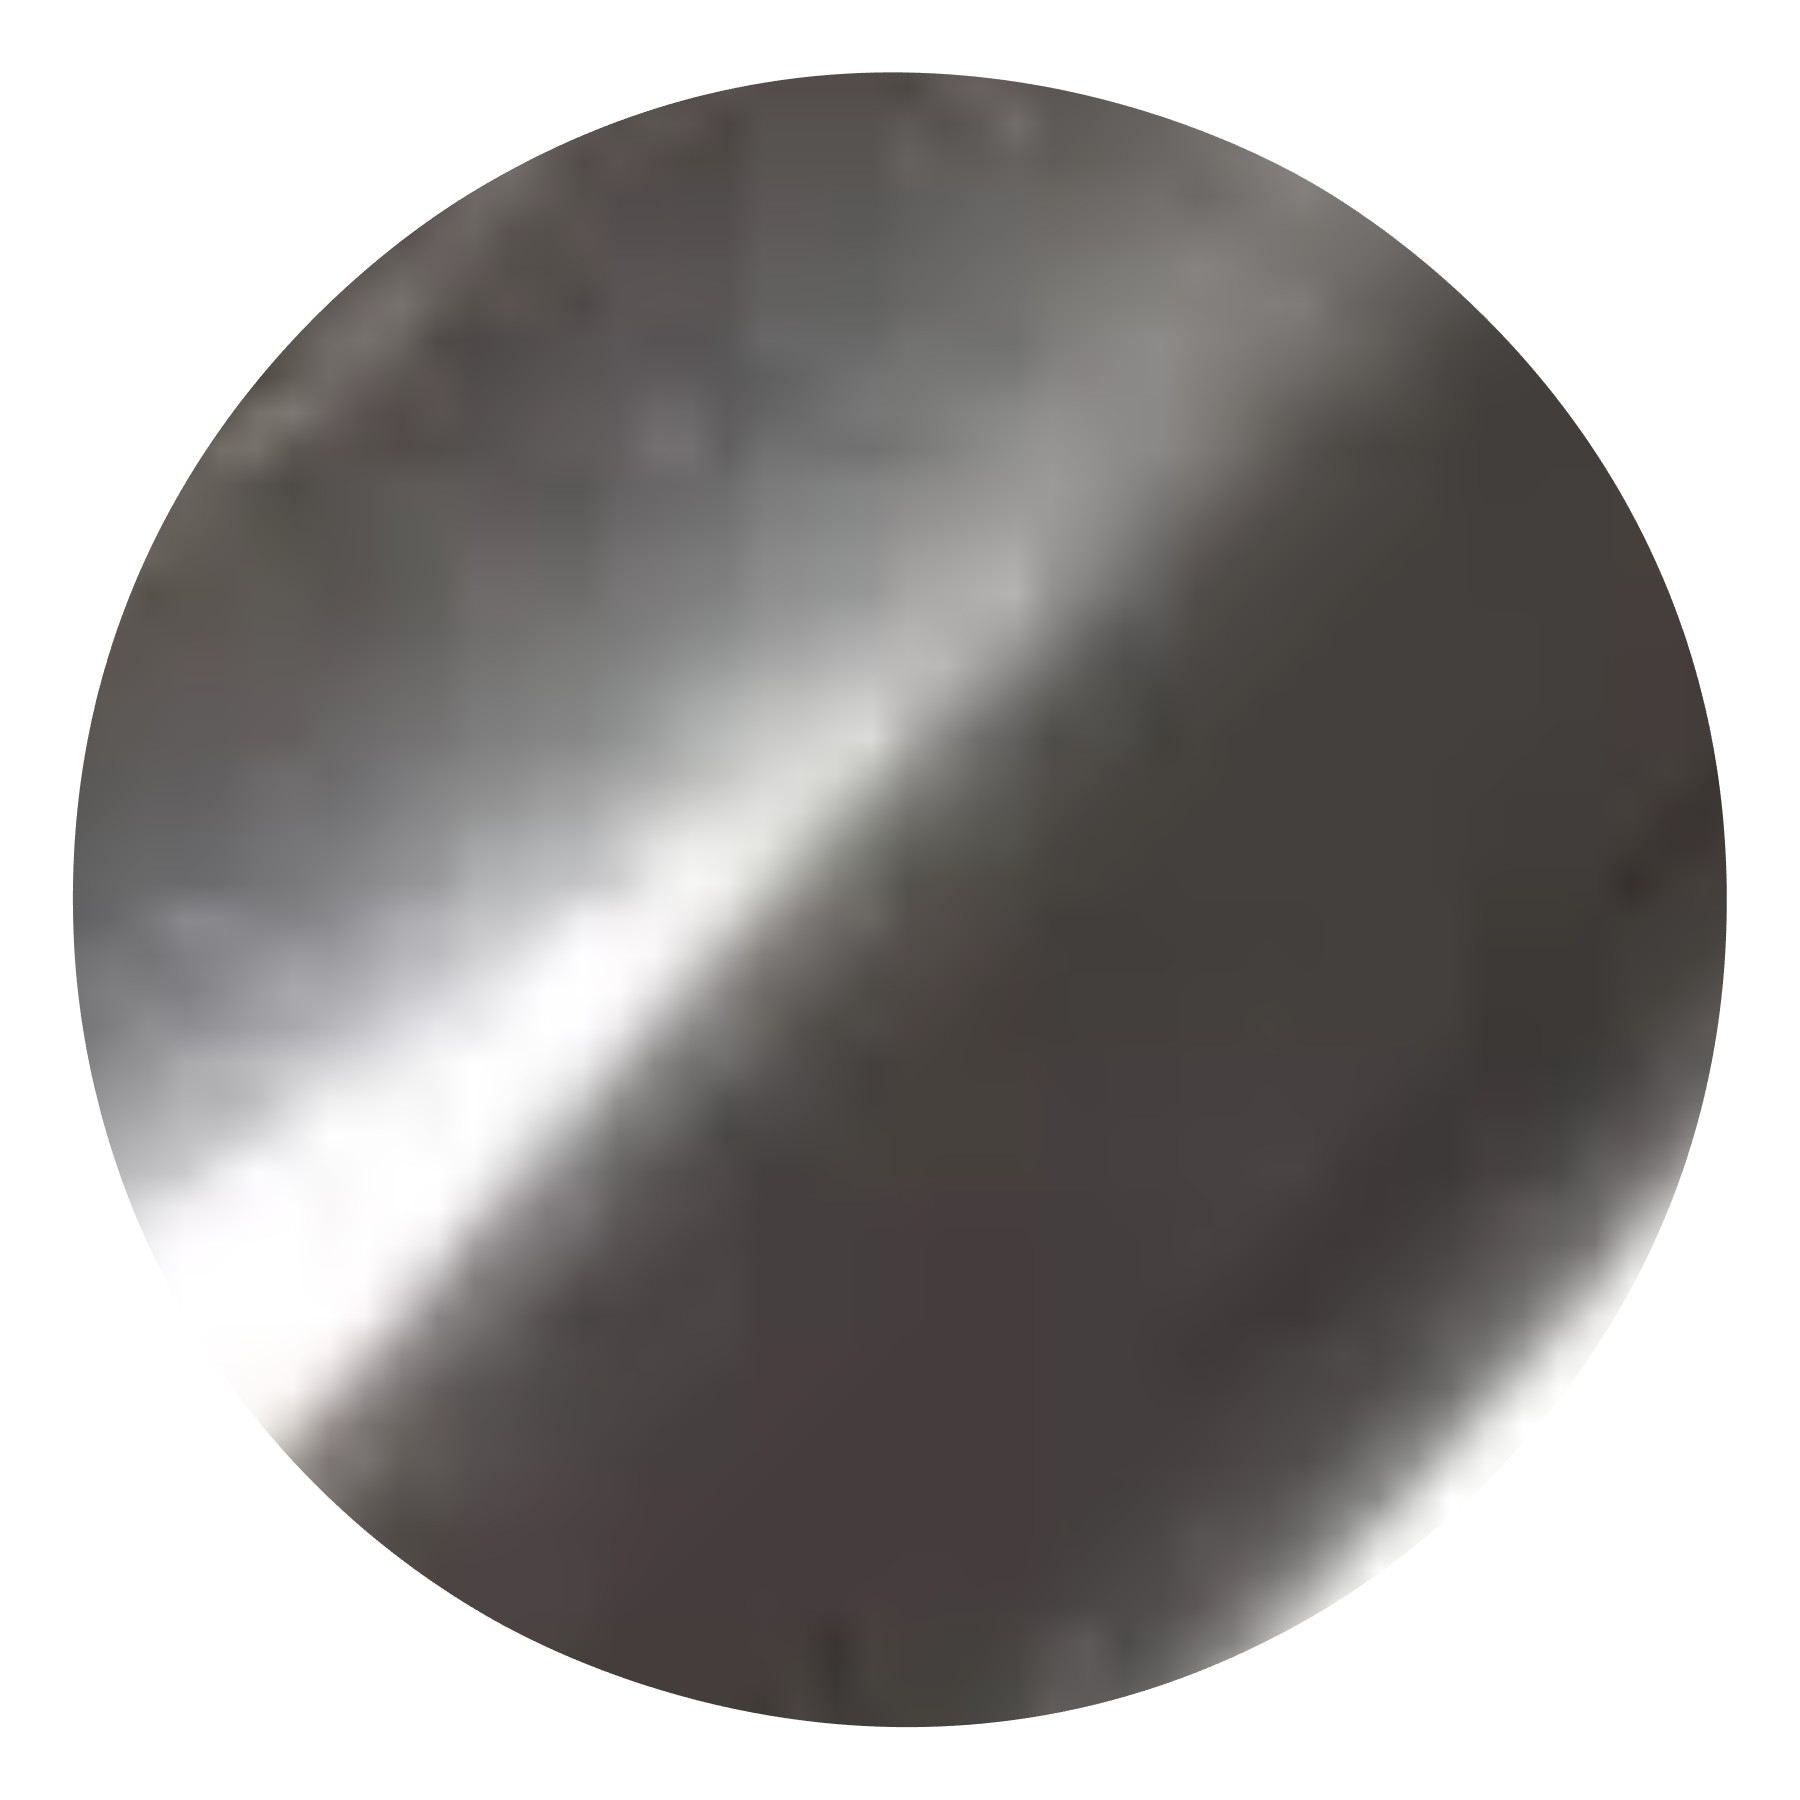 DesignTec - Vinilo adhesivo reflectivo blanco 30 cm de ancho